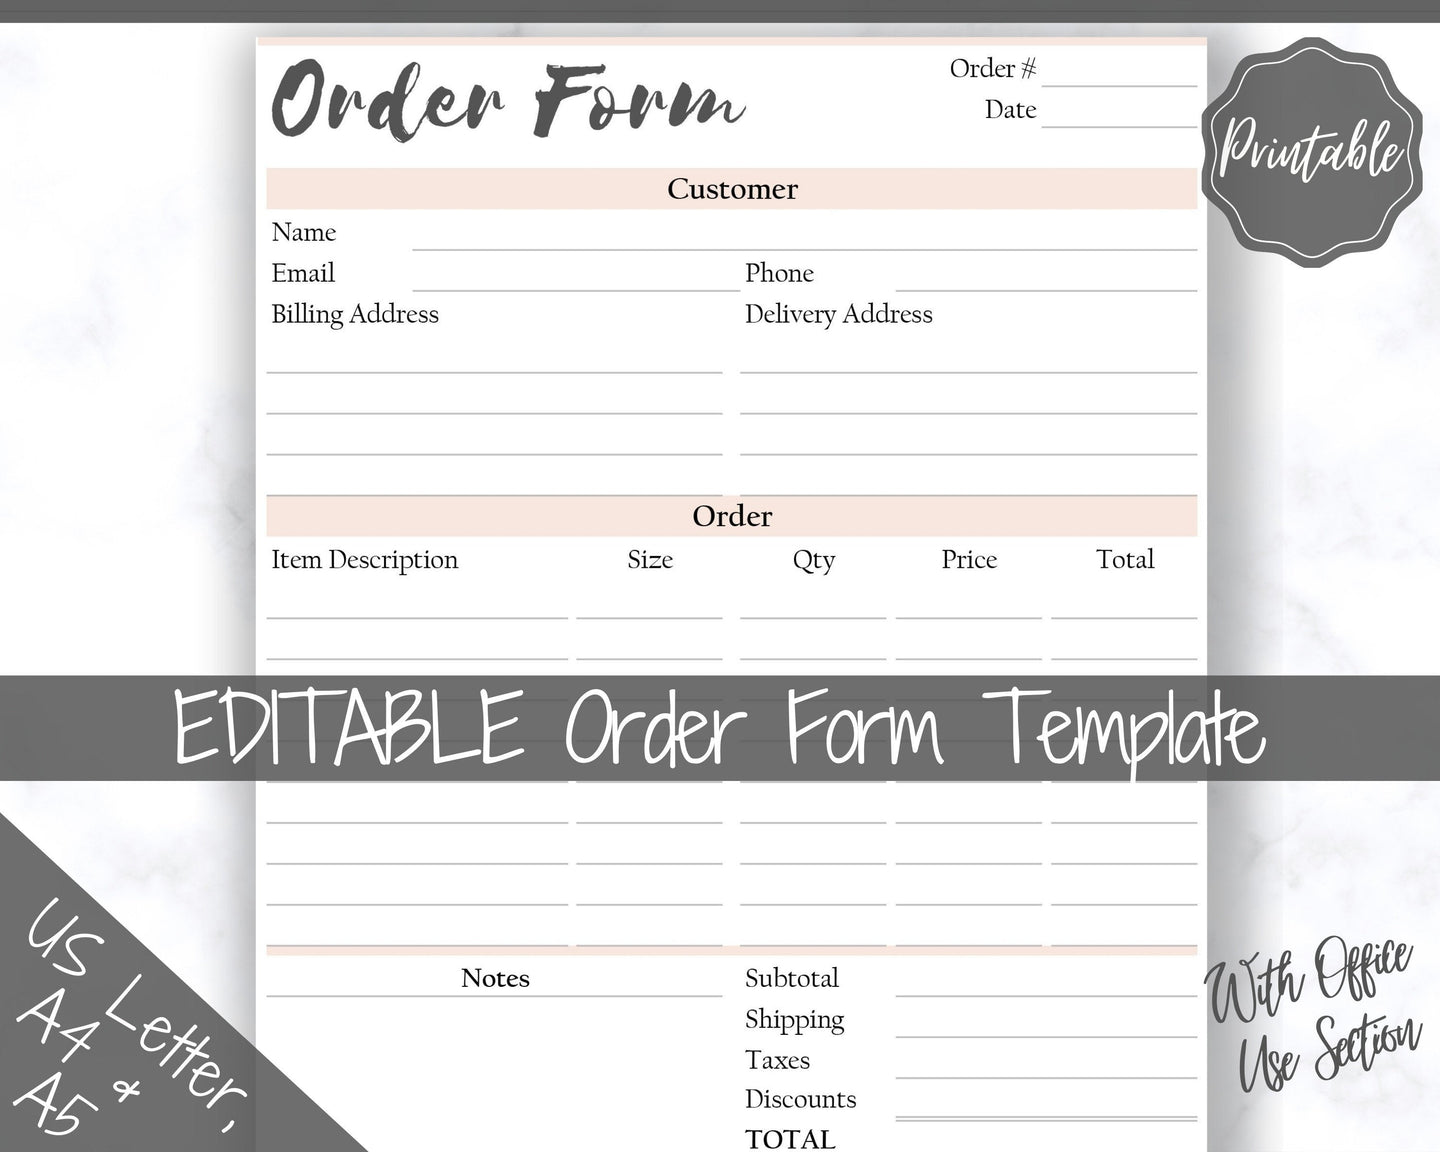 Order Form Template. EDITABLE PINK Customer Sales Order Invoice. Printable Invoice. Ordering Form Receipt. PDF Instant Digital Download | Style 3